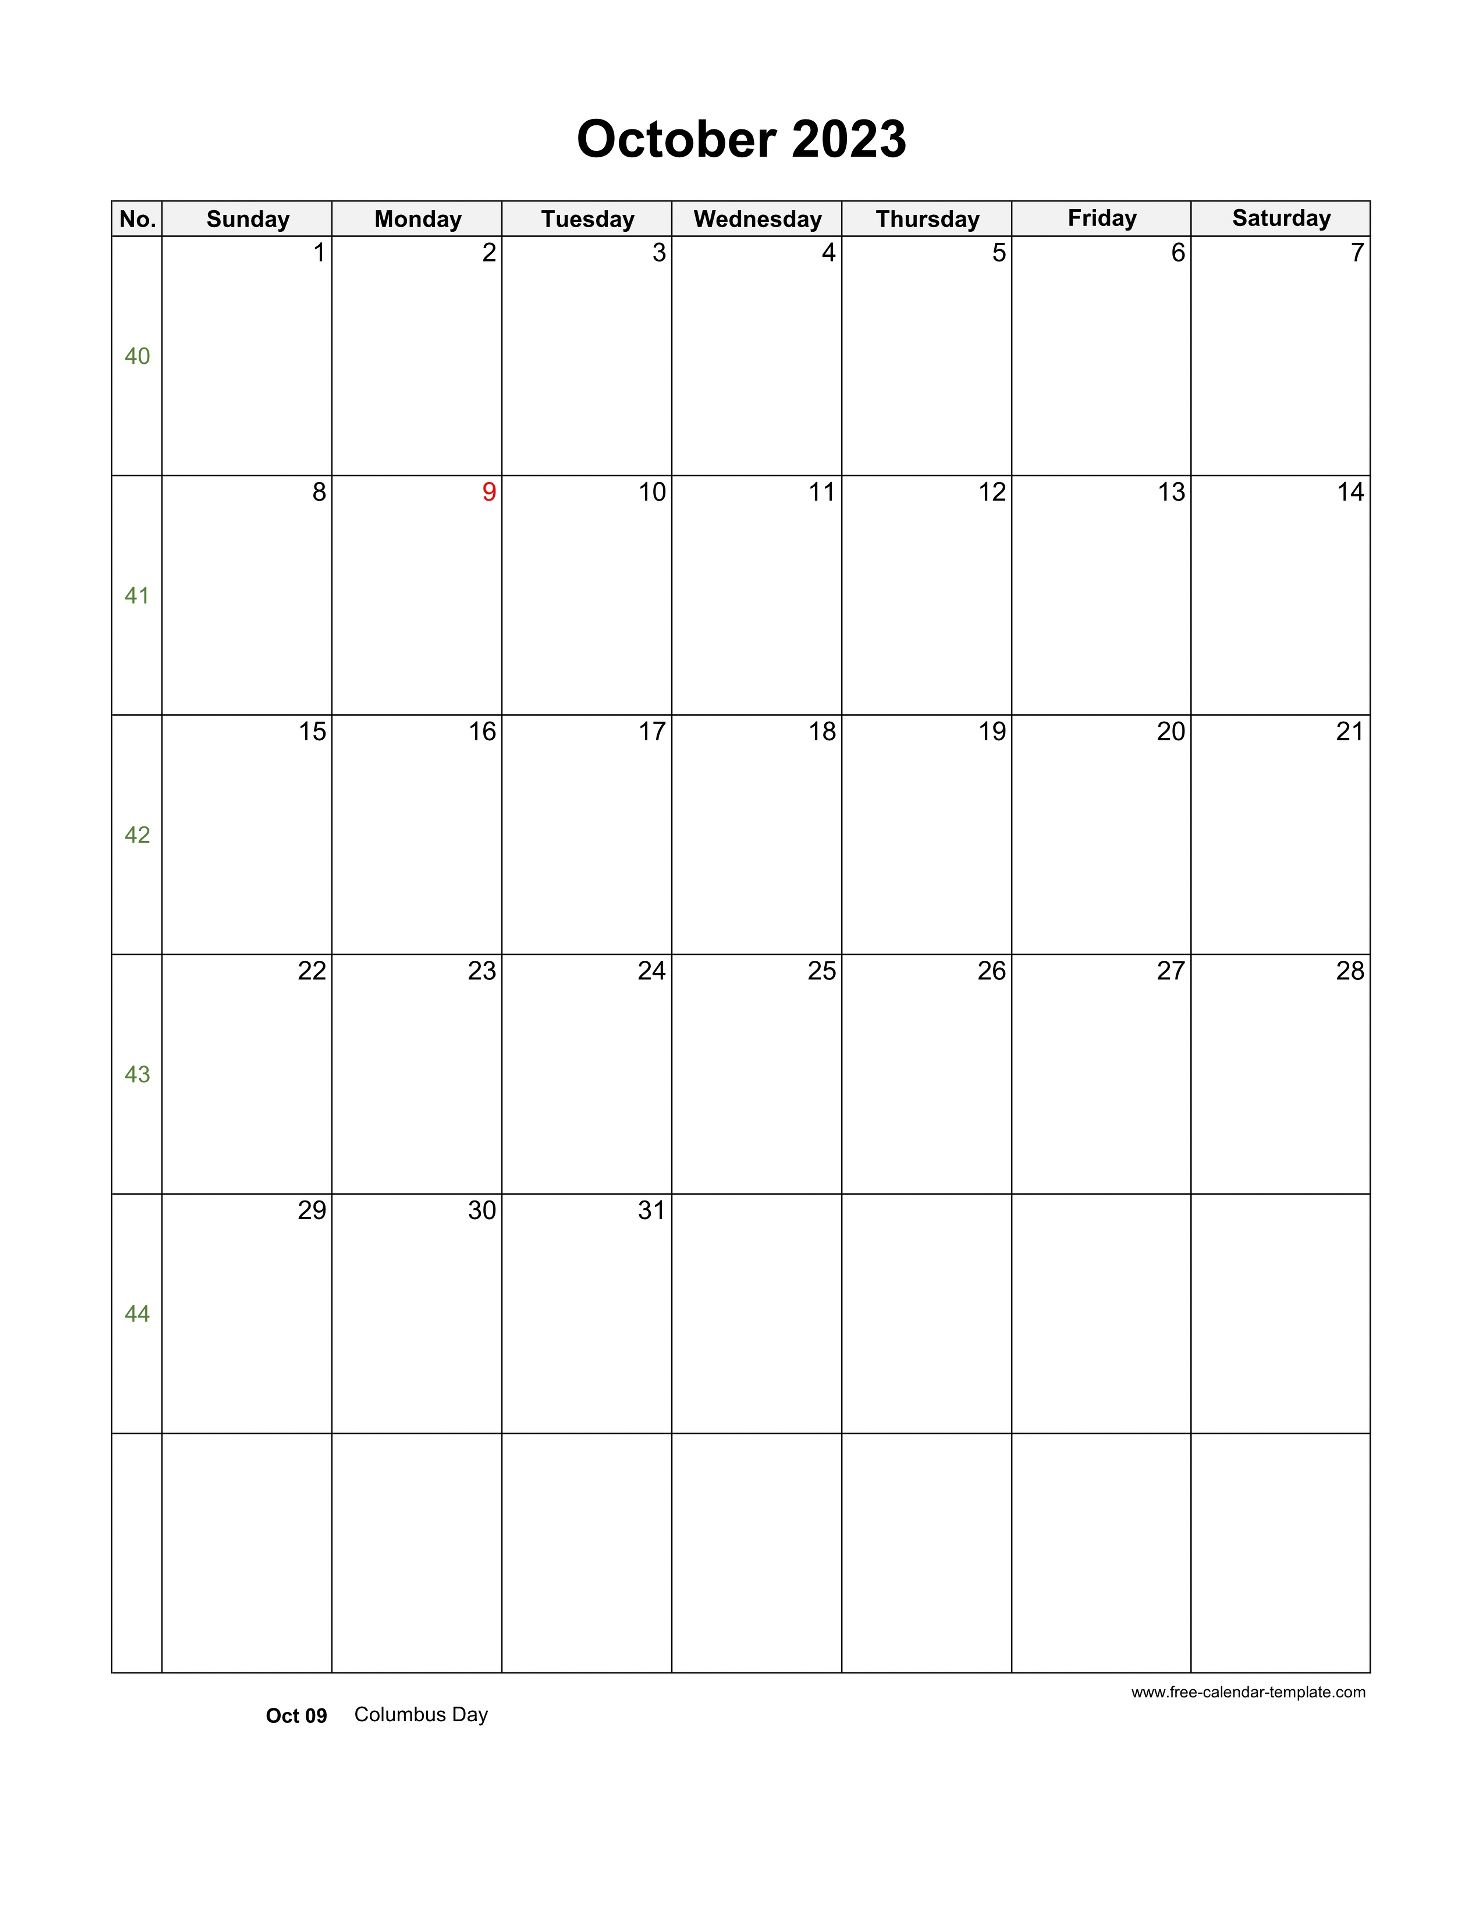 october-2023-free-calendar-tempplate-free-calendar-template